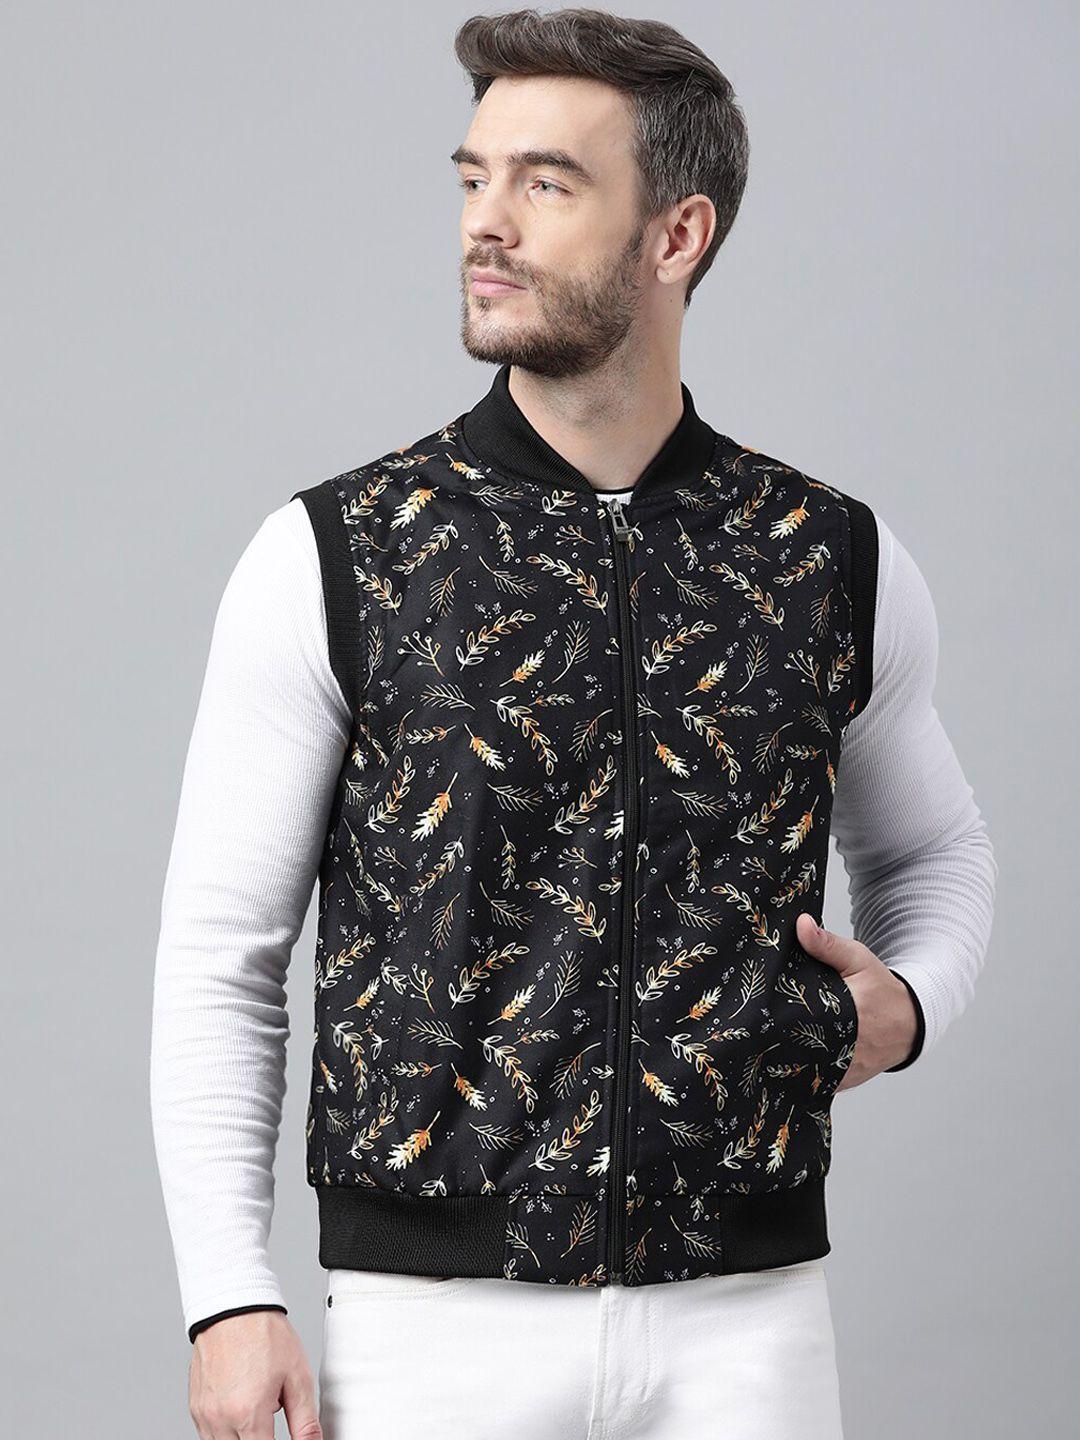 hangup-men-black-floral-printed-pullover-sweater